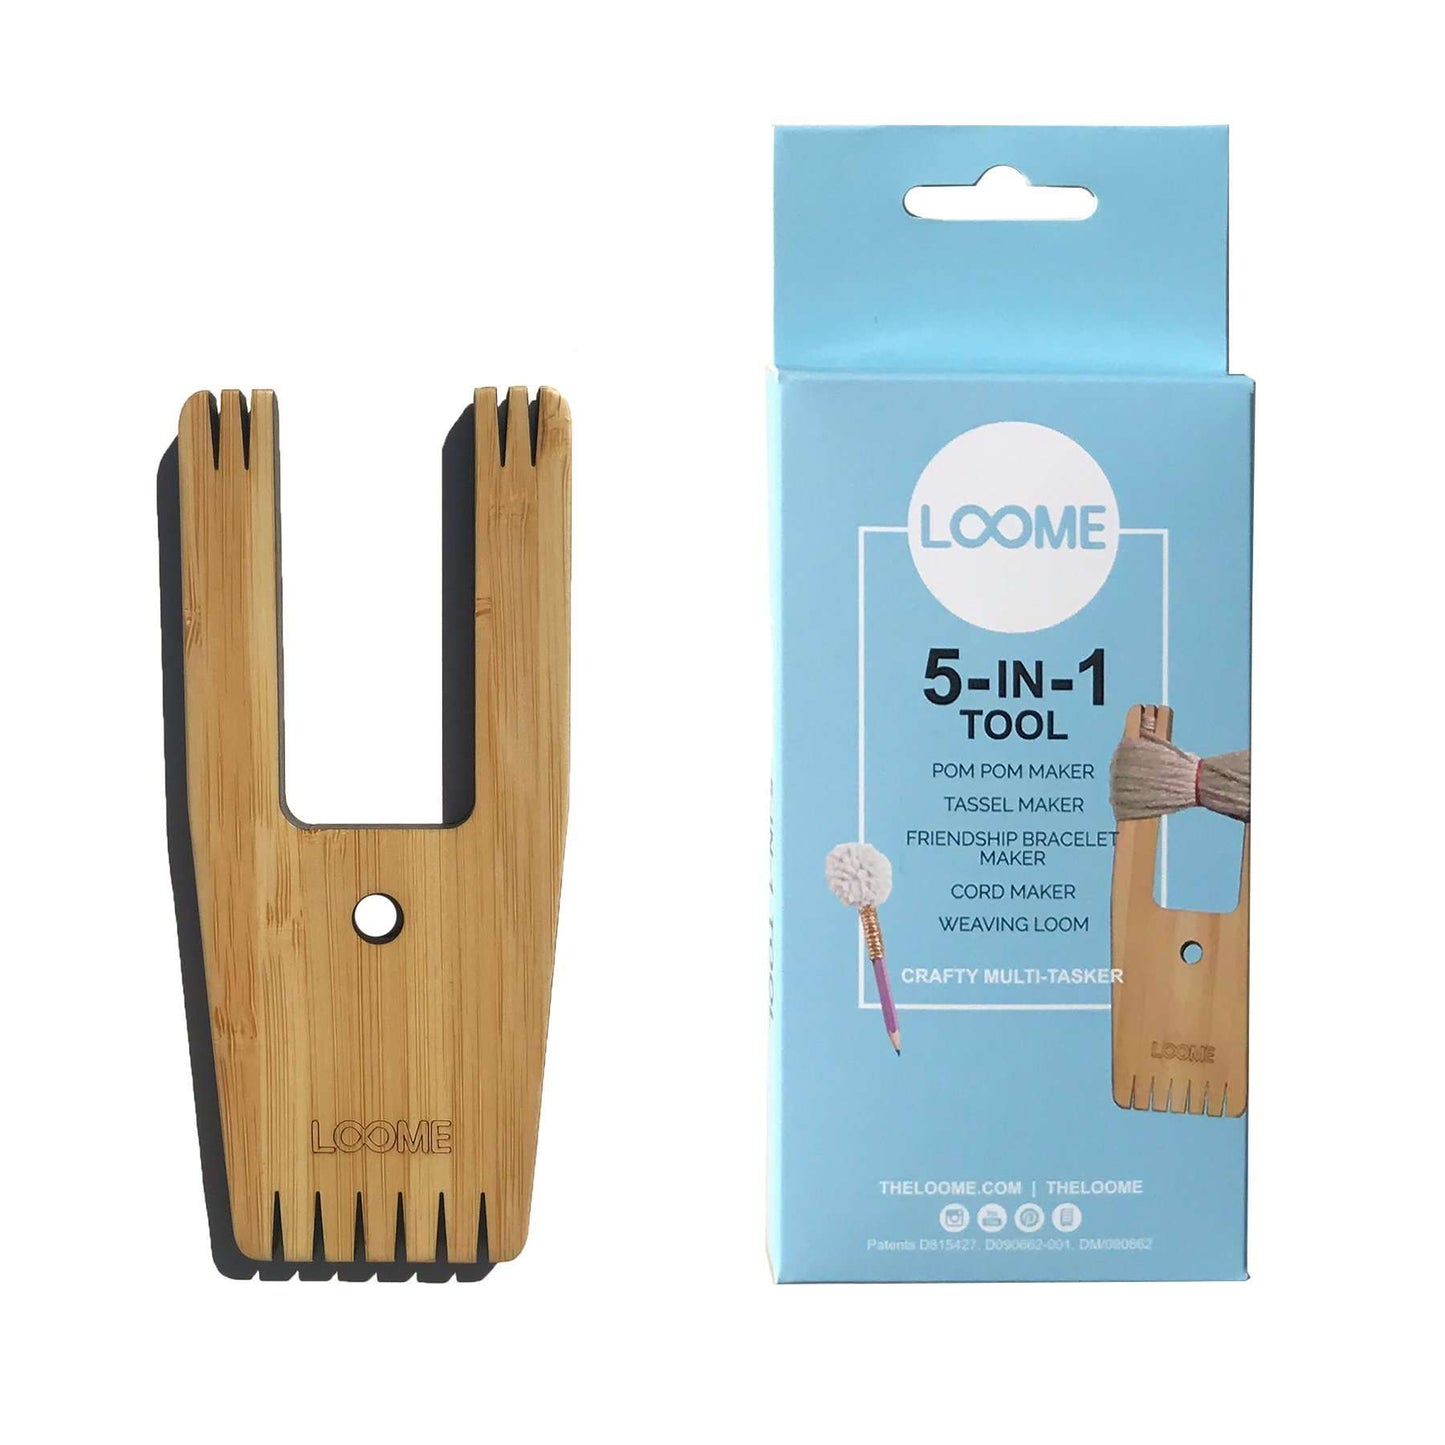 Loome 5-in-1 Craft Tool